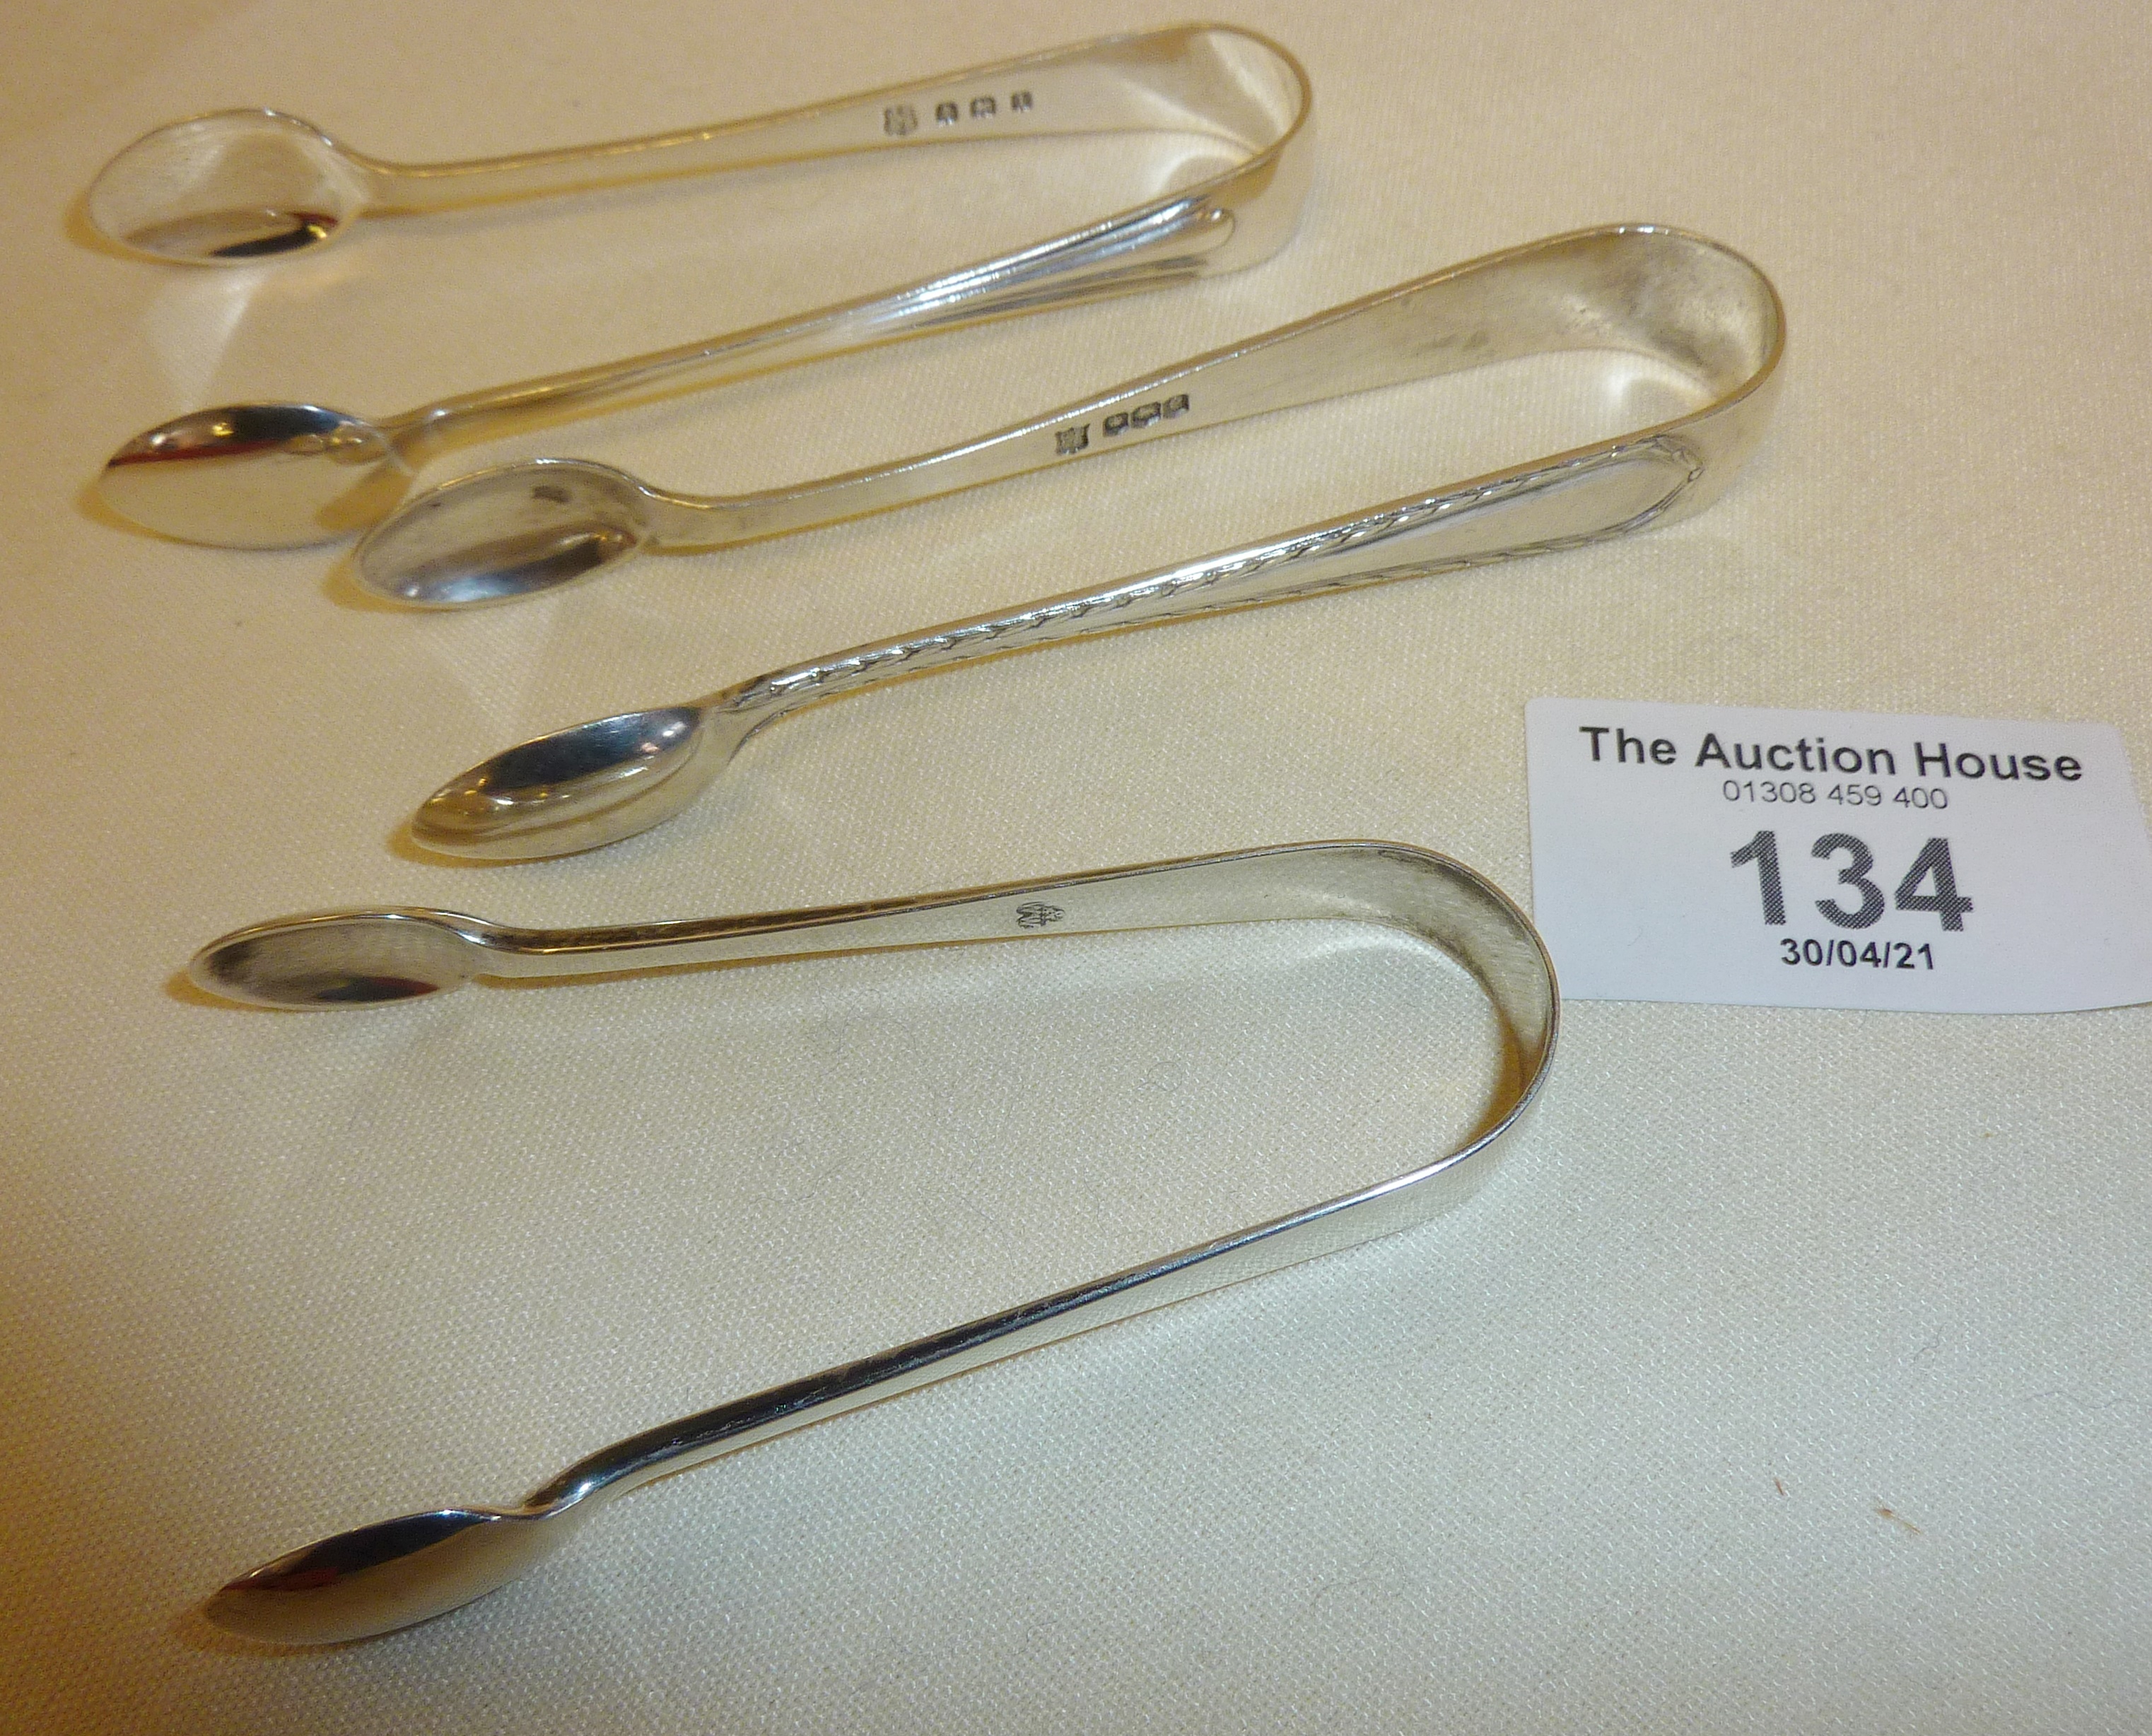 Three pairs of hallmarked silver sugar tongs - approx. 34g